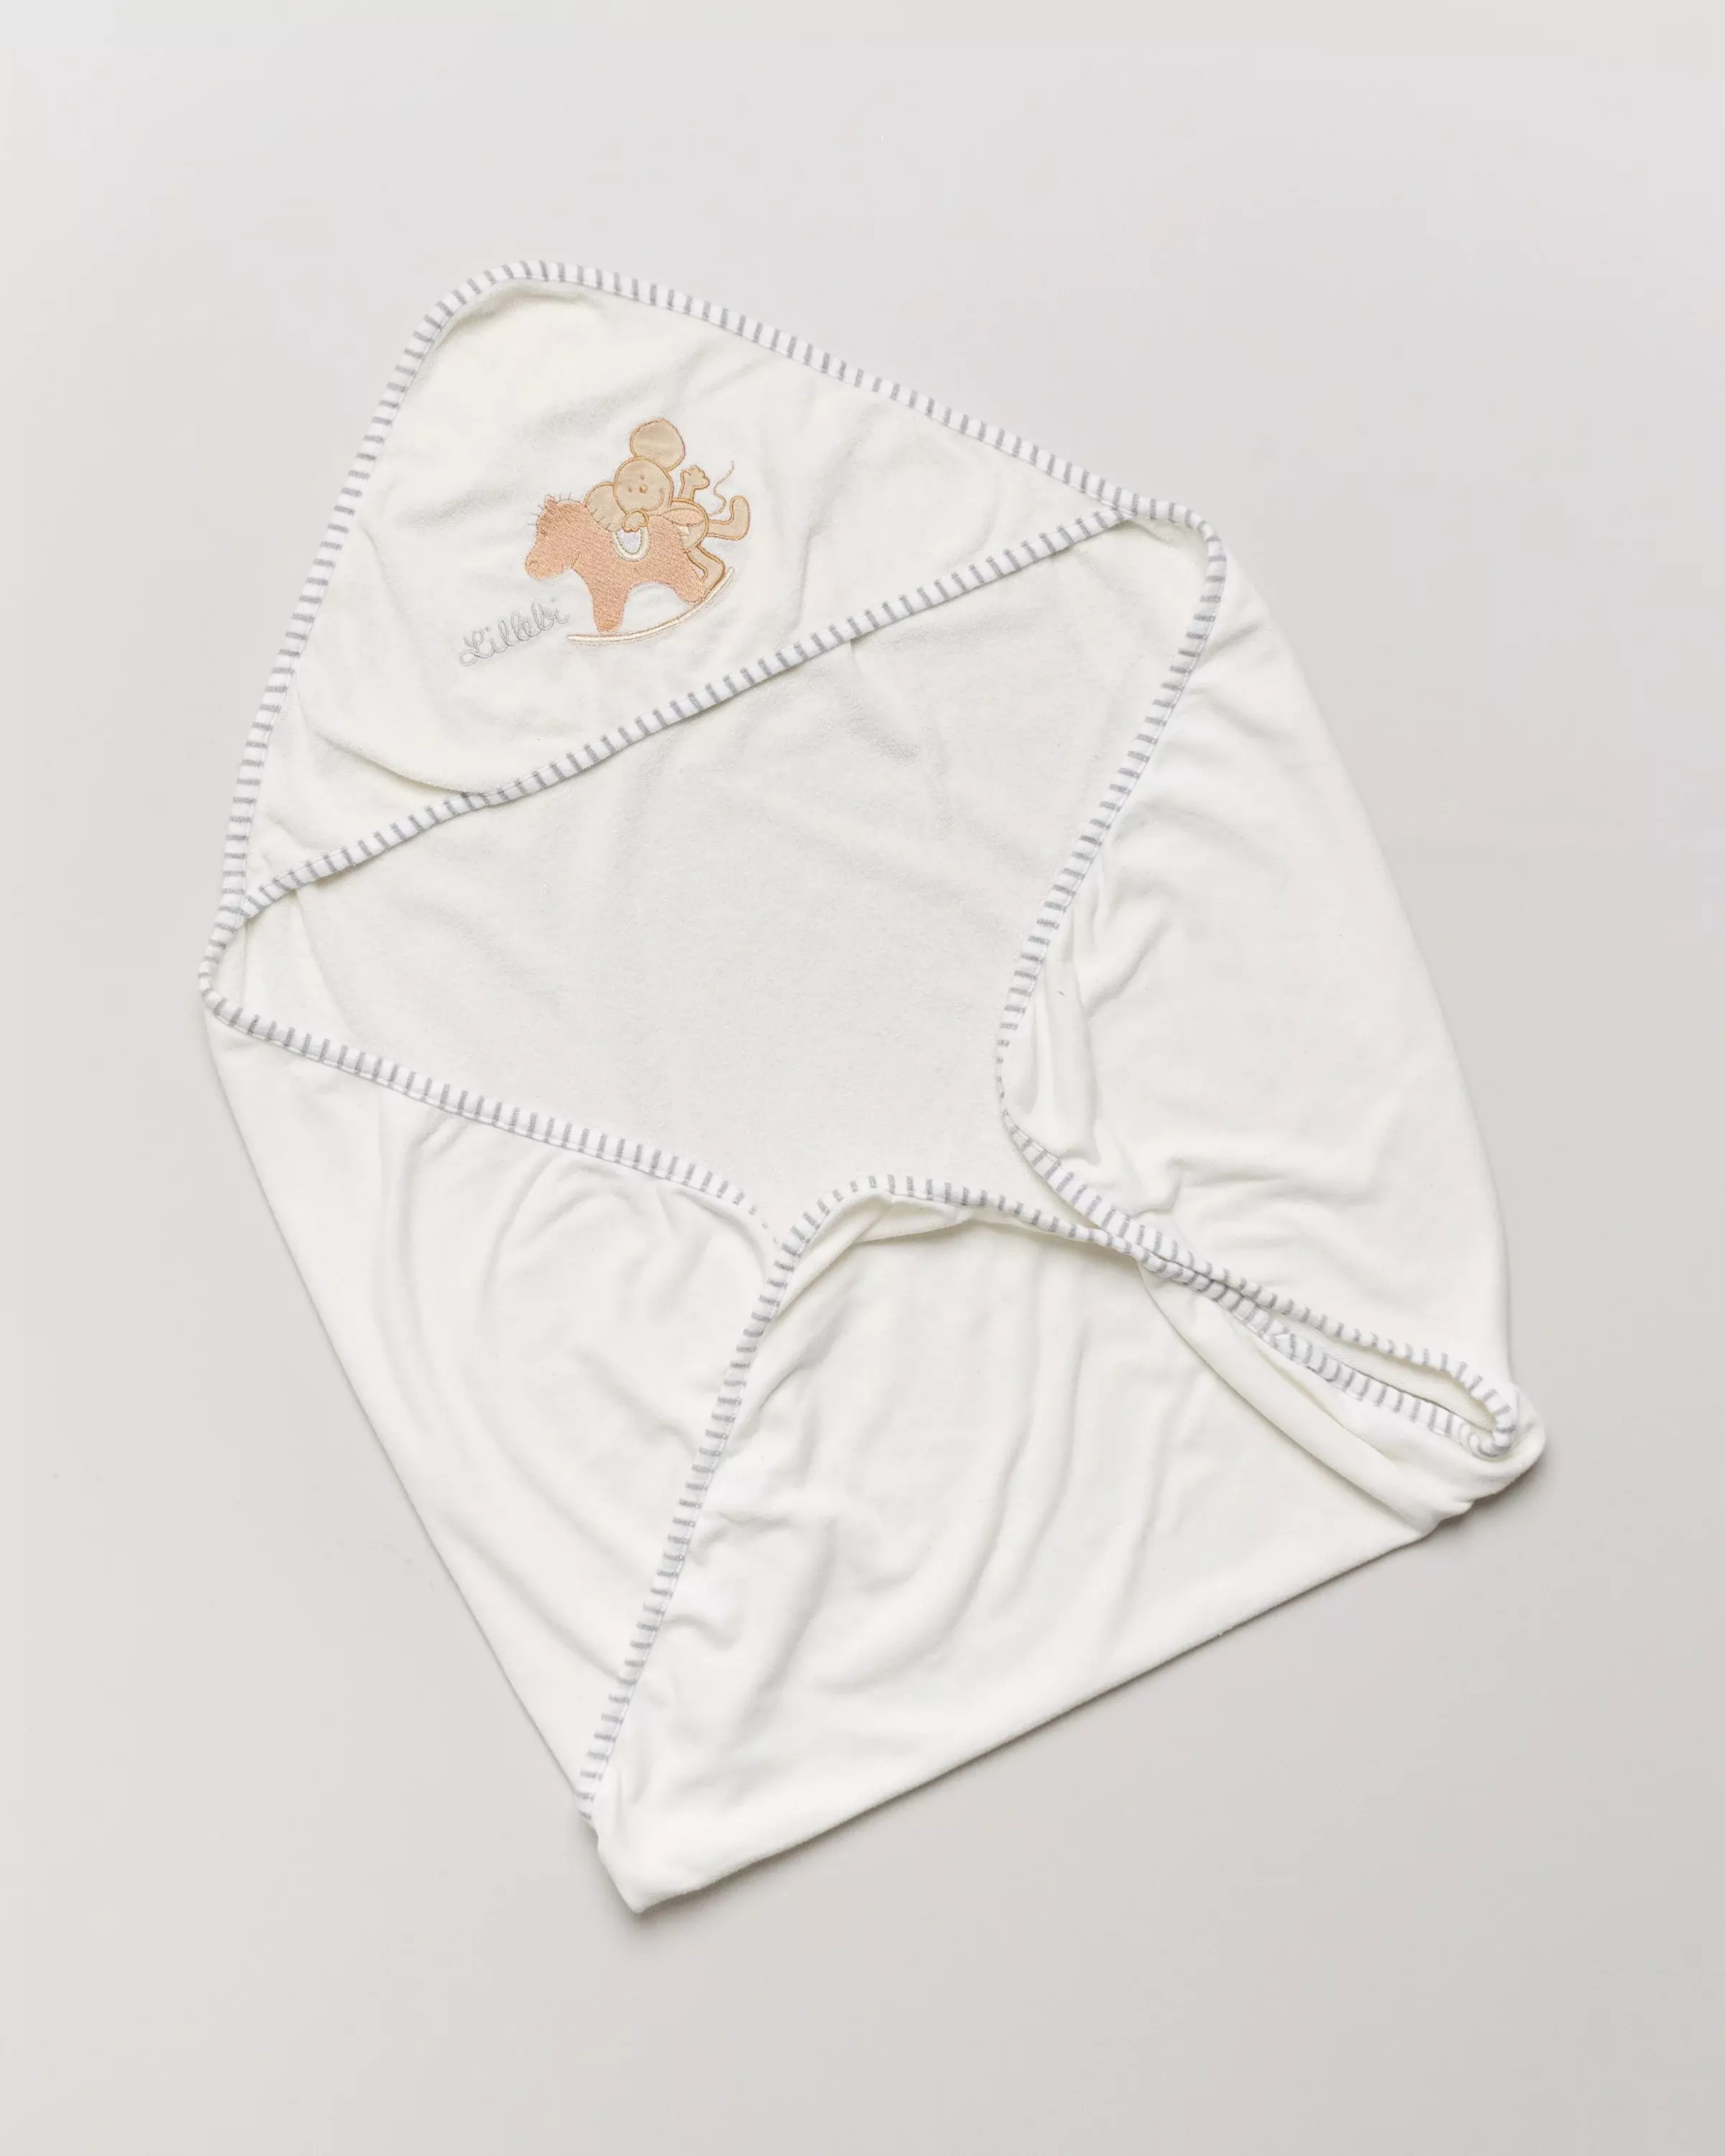 Handtuch 102 cm Diagonale – Lillebi Kaputze Schaukelpferd beige